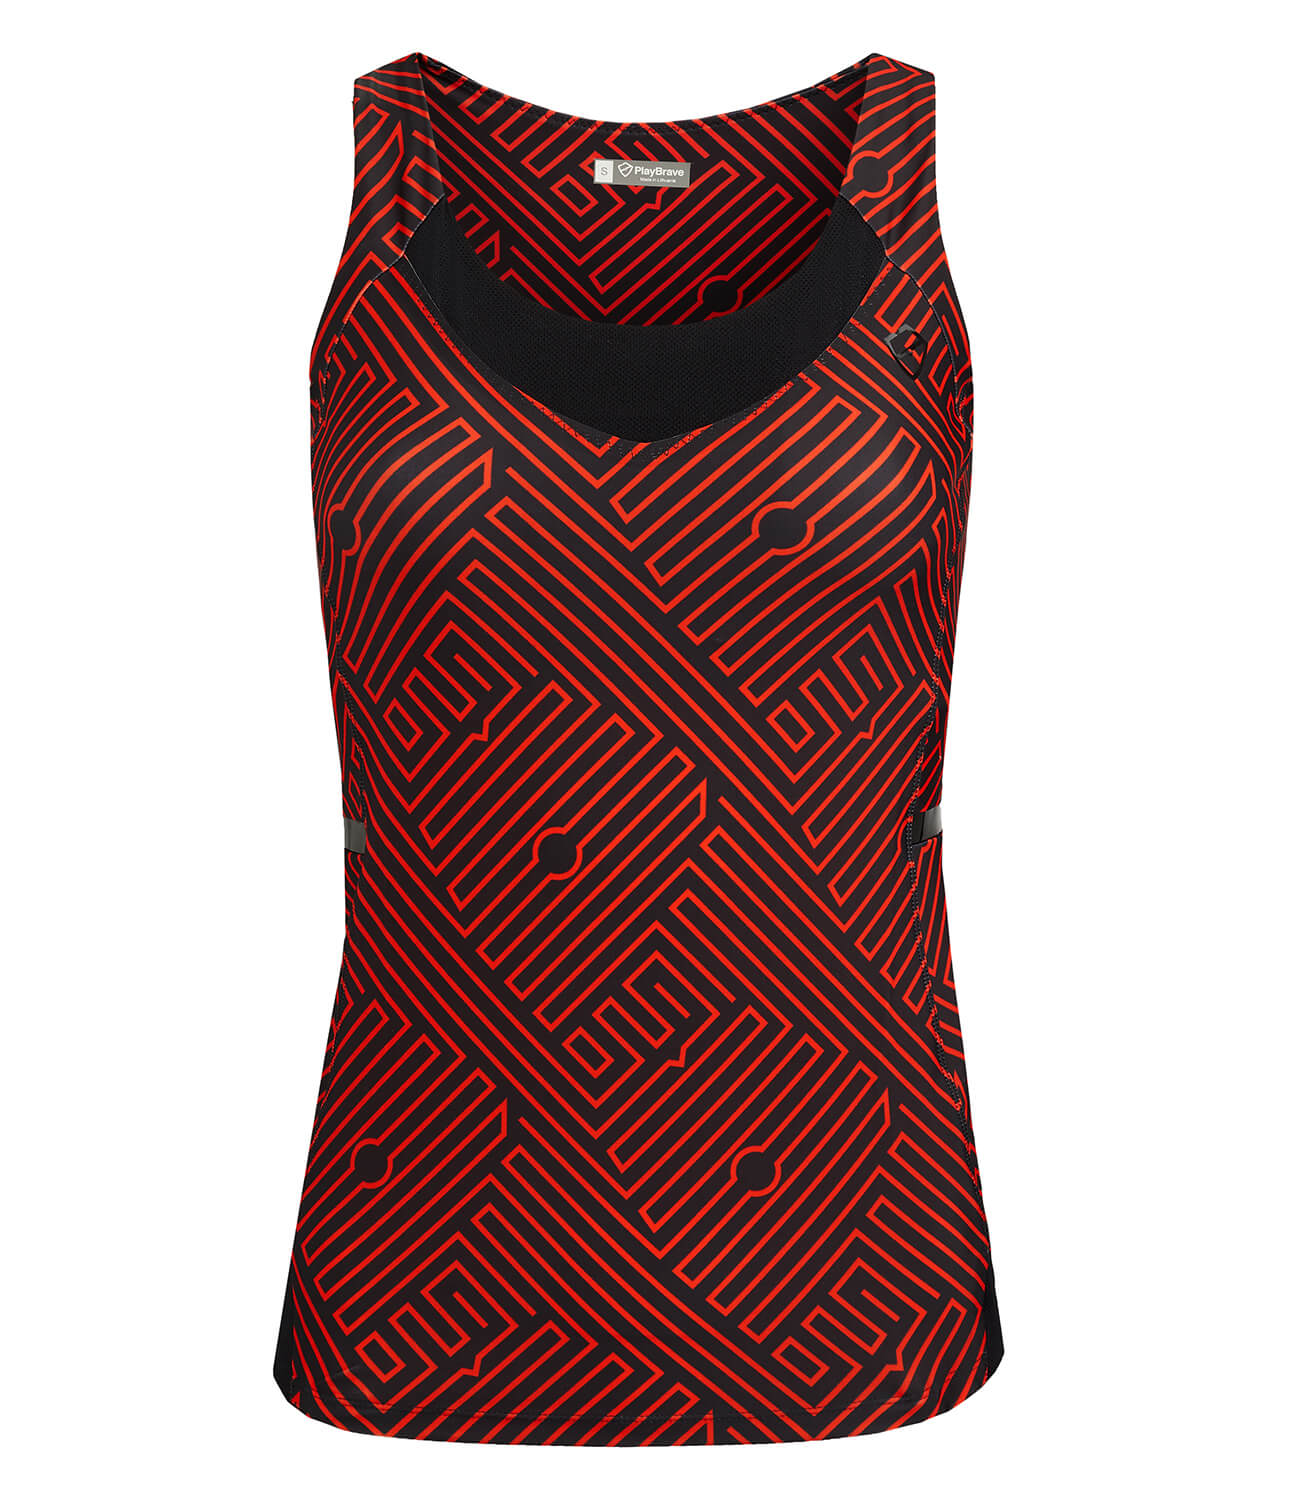 Tennis T-shirt Vests-Women's Tops-Veronica Performance Vest - Black Flame Print-PlayBrave Sports UK